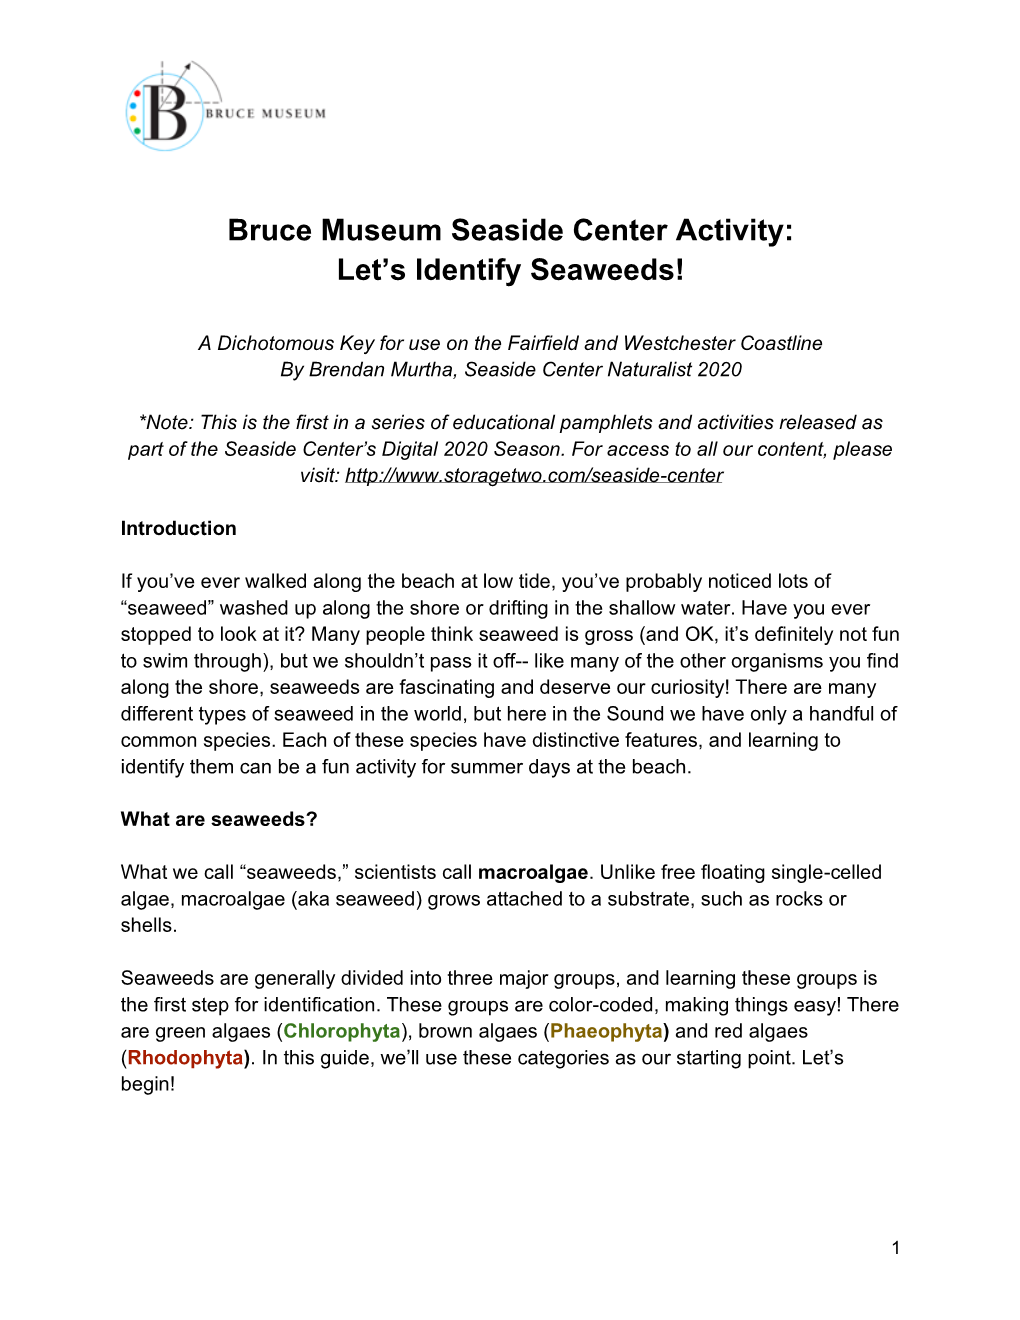 Bruce Museum Seaside Center Activity: Let's Identify Seaweeds!